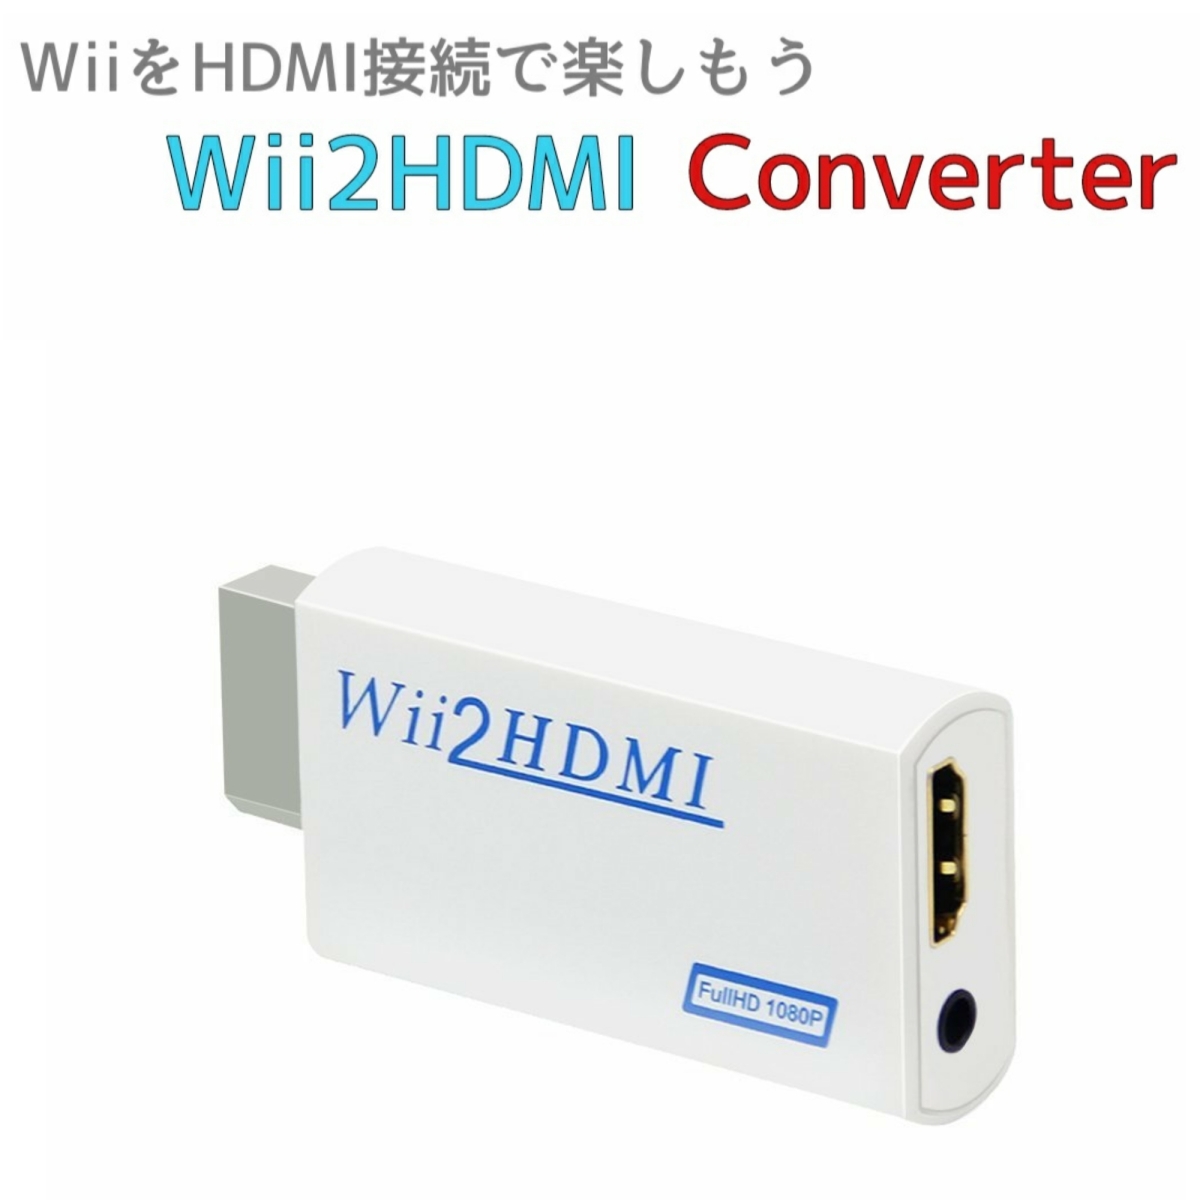 HDMIコンバーターの値段と価格推移は？｜58件の売買情報を集計したHDMI